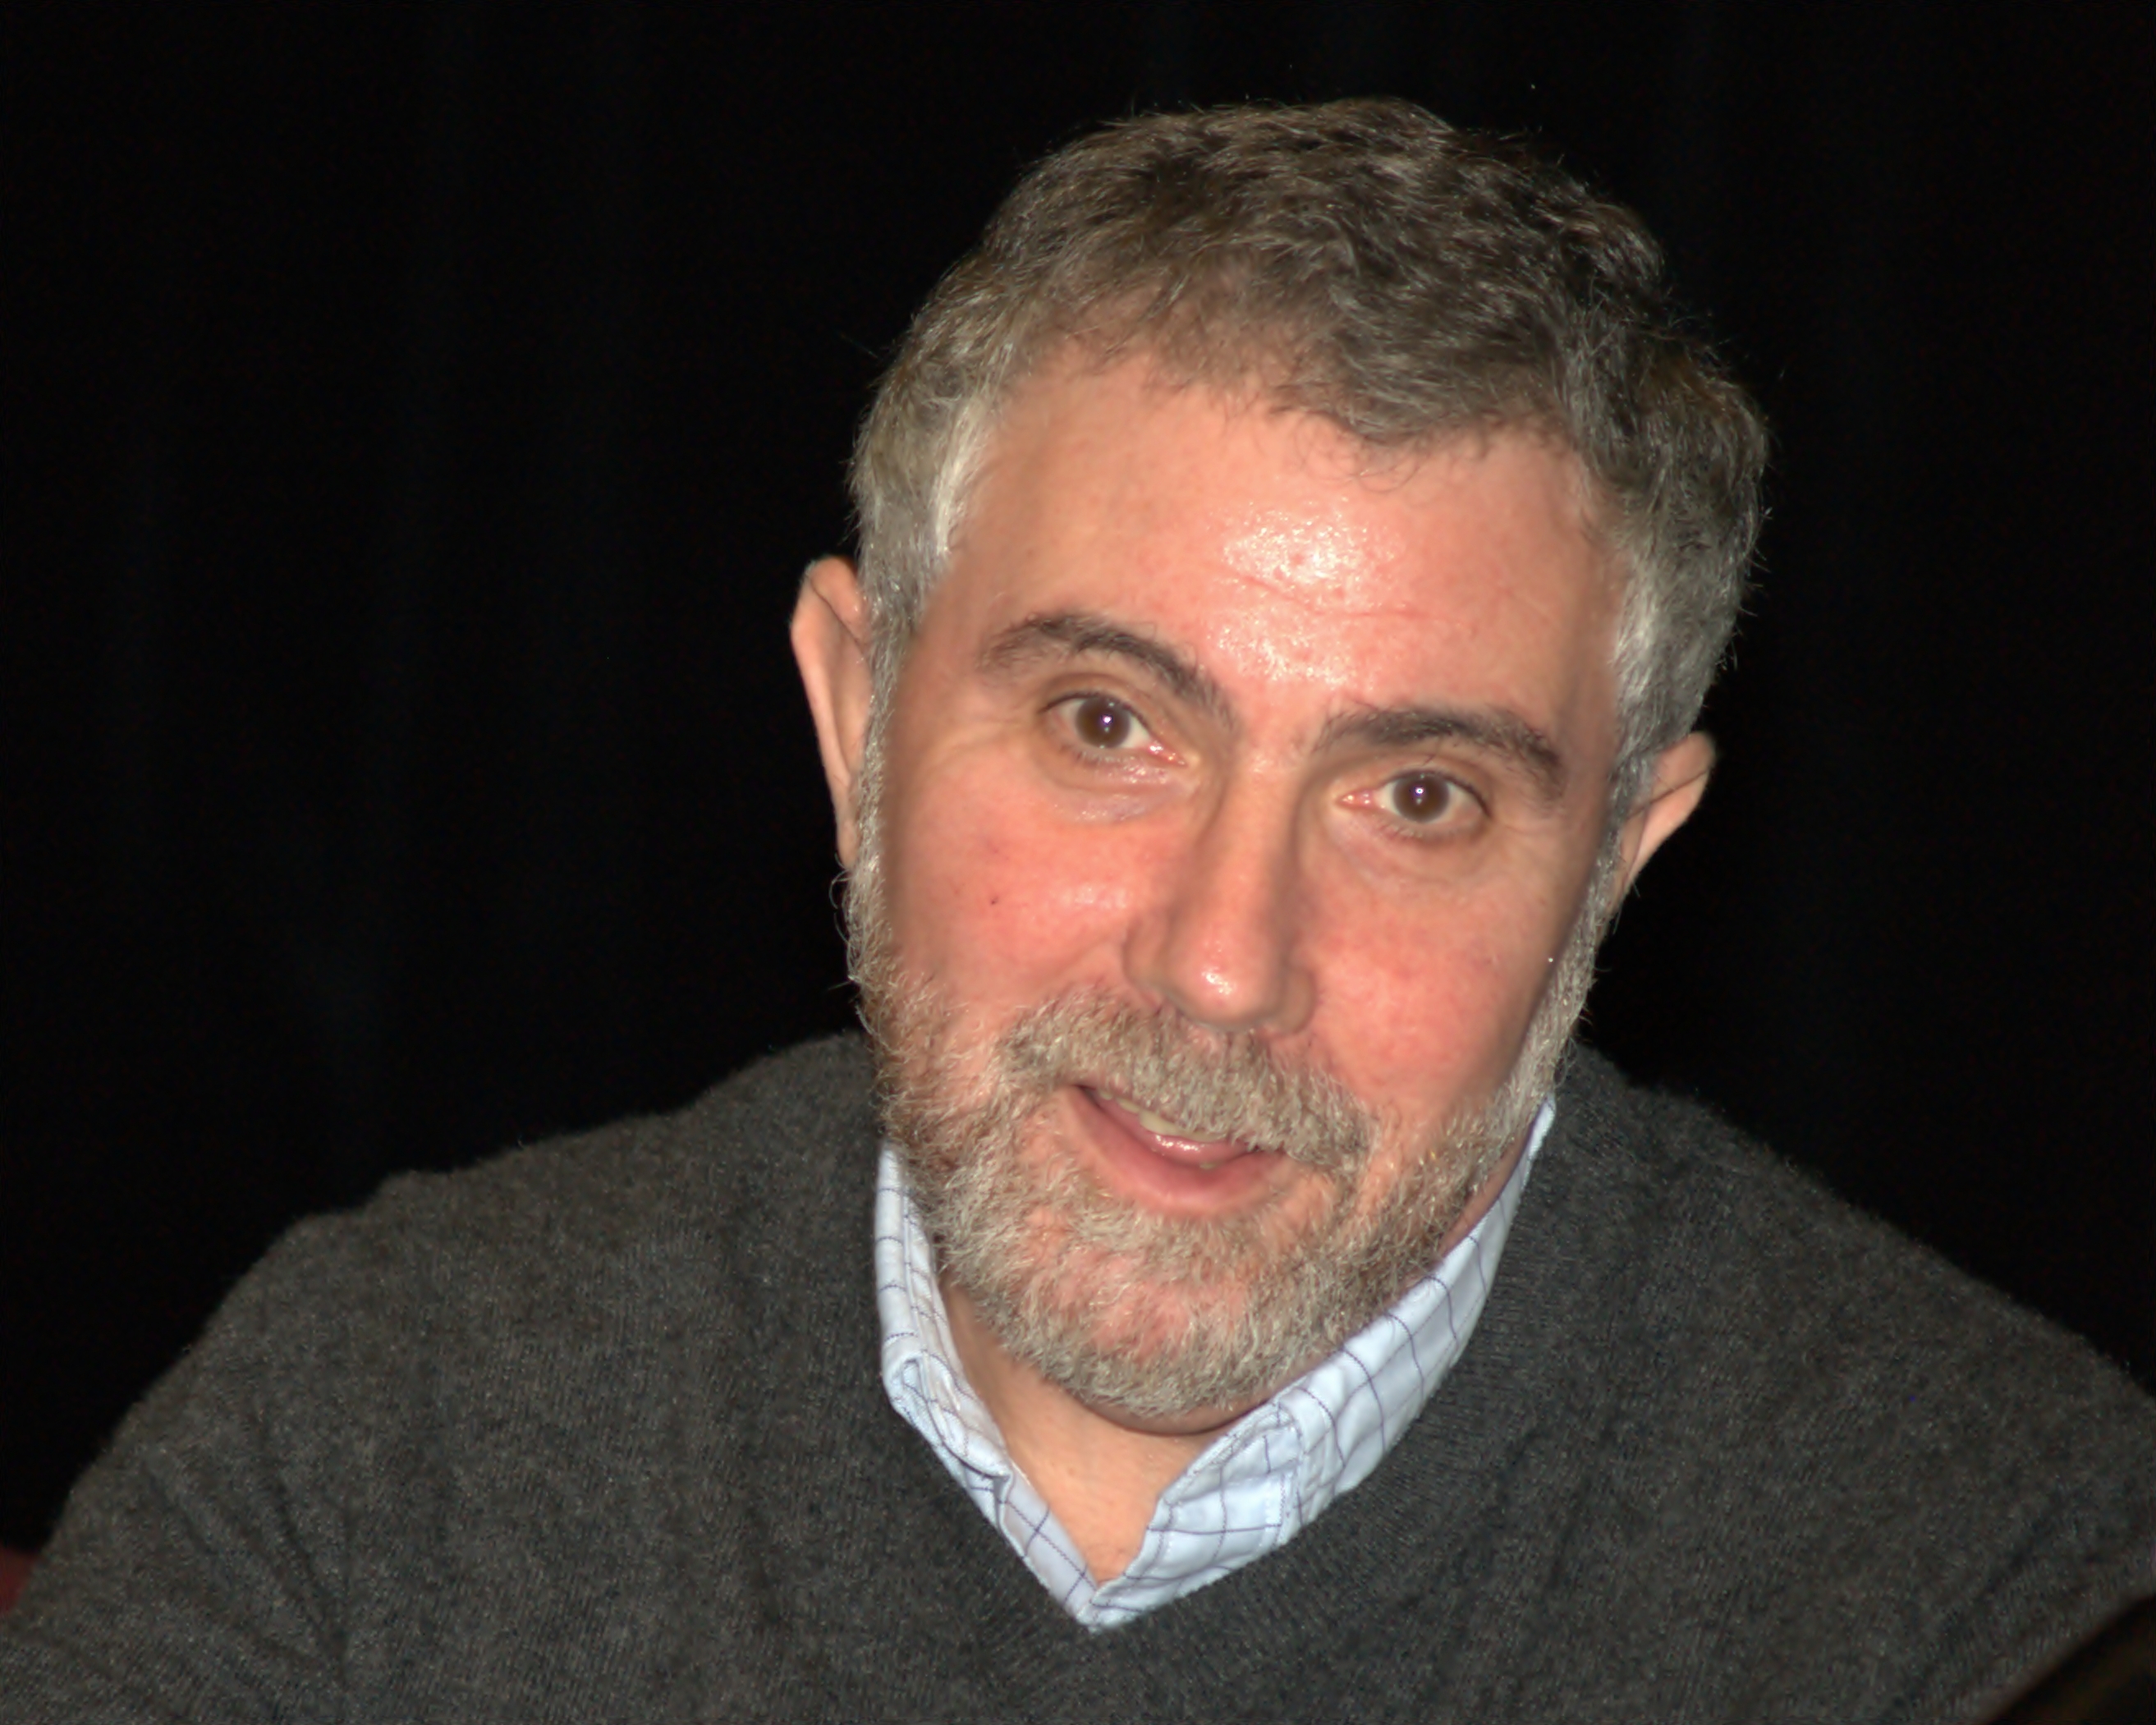 More MMT follies (Sympathy for Krugman)